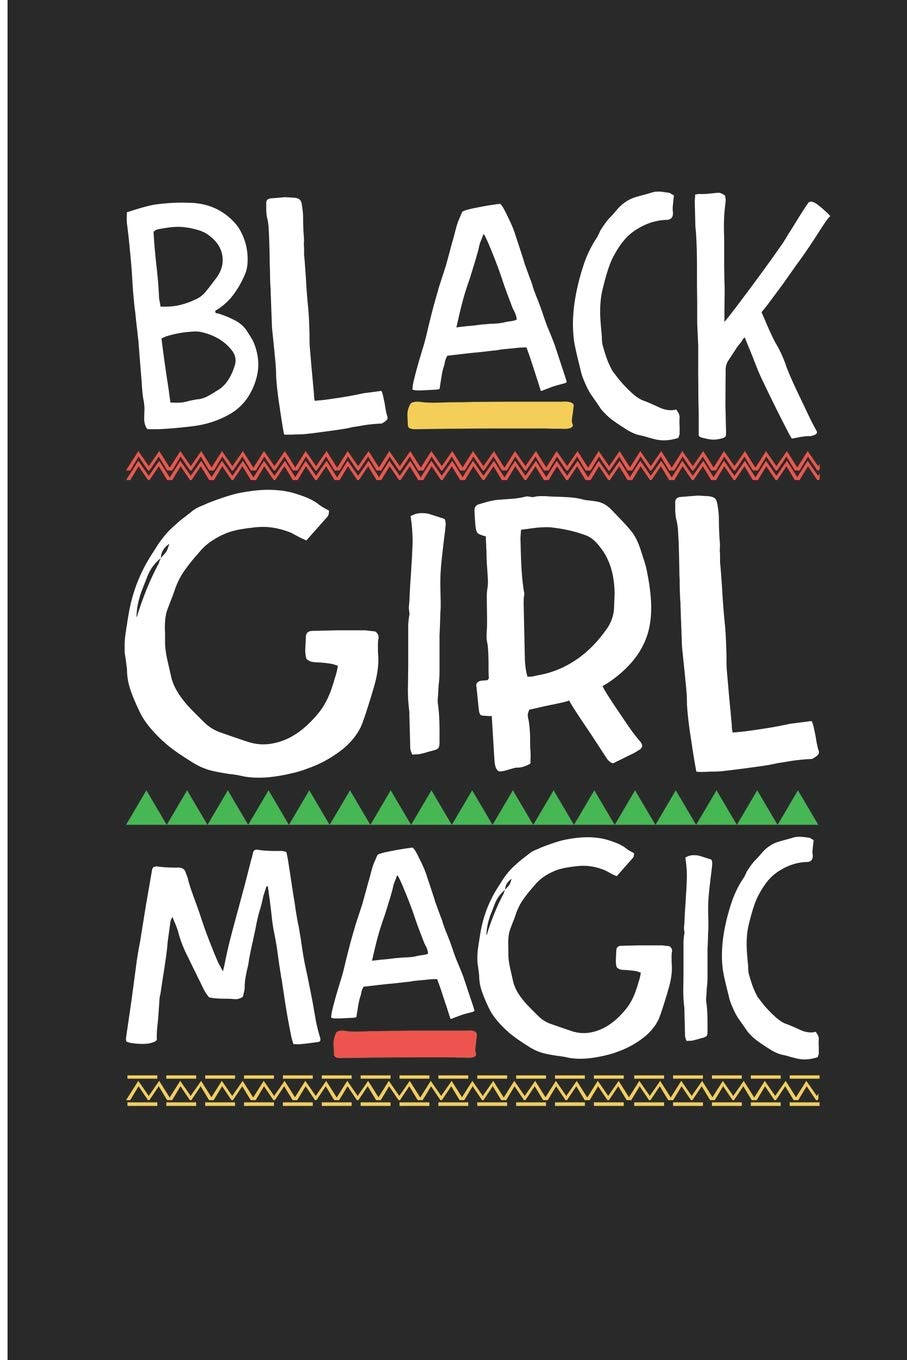 Plakat af sort tegnefilm pige magi glitter Wallpaper